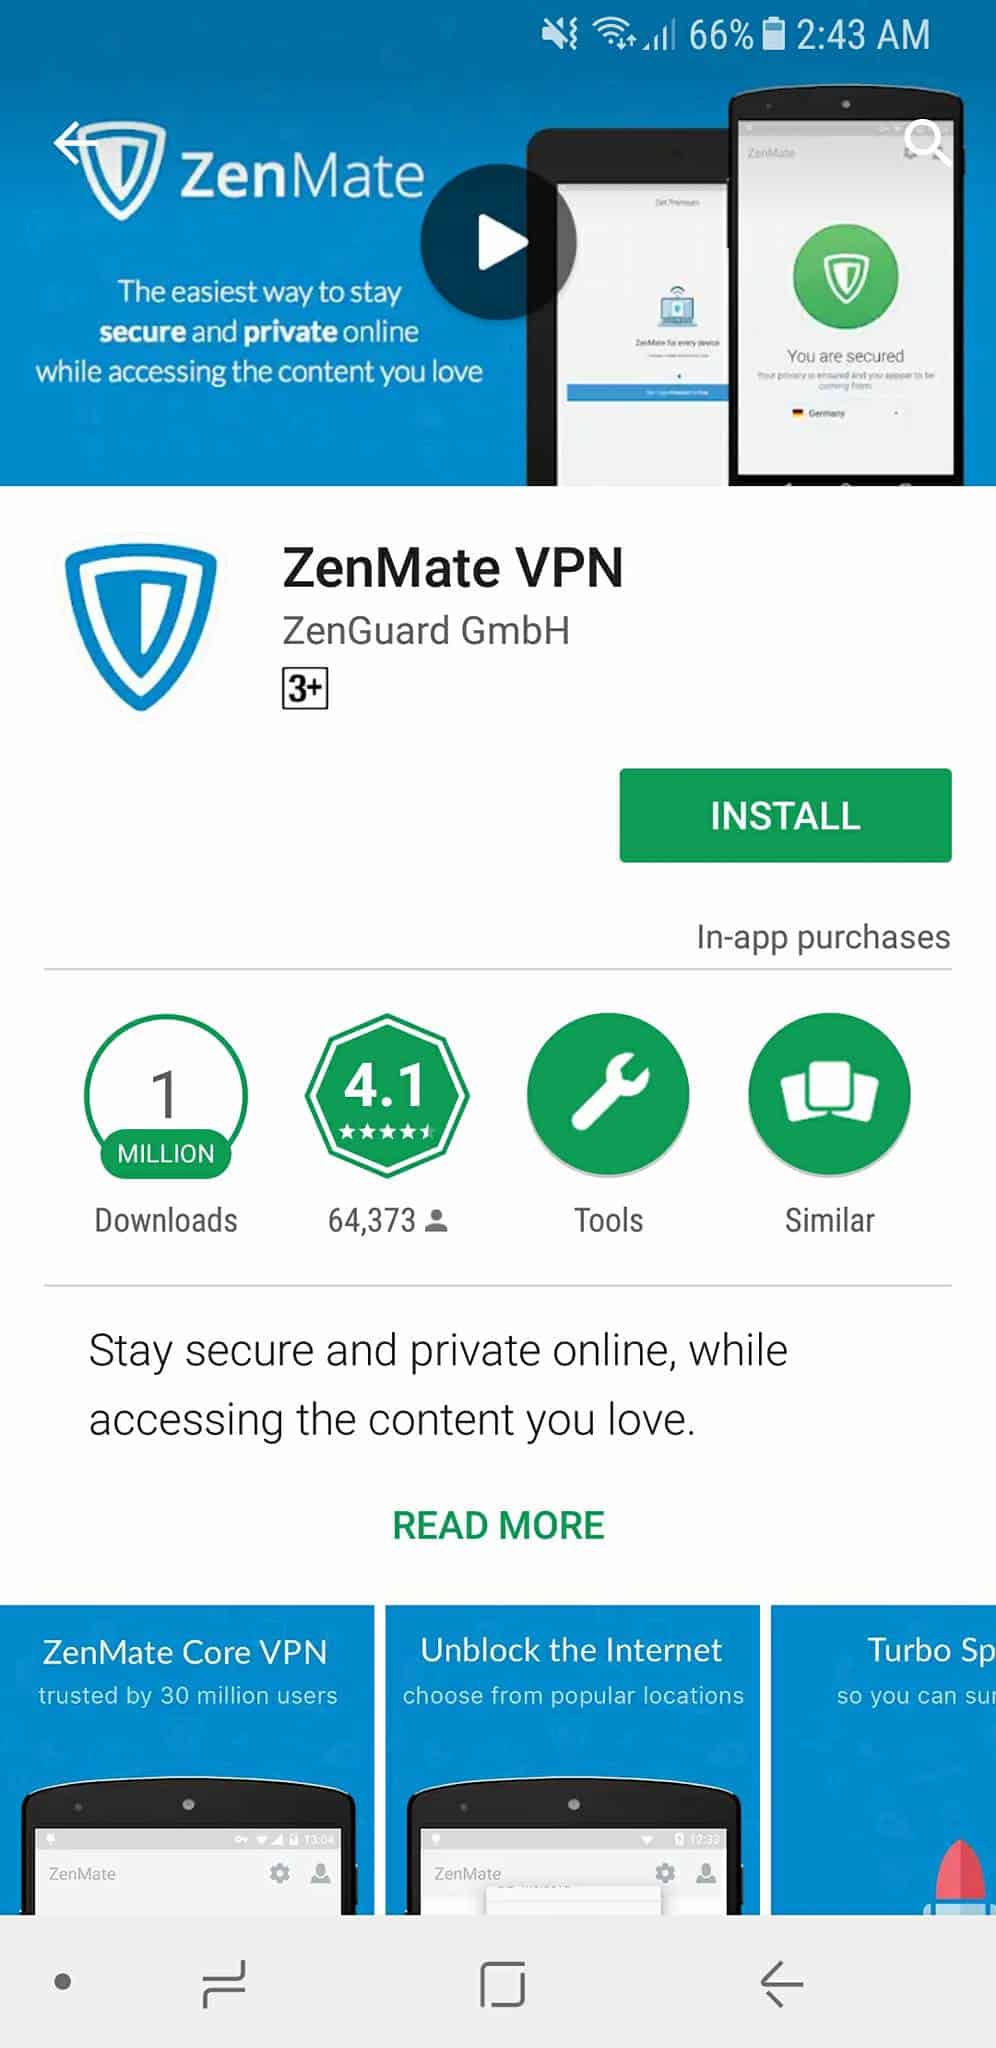 ZenMate VPN step 1 guide